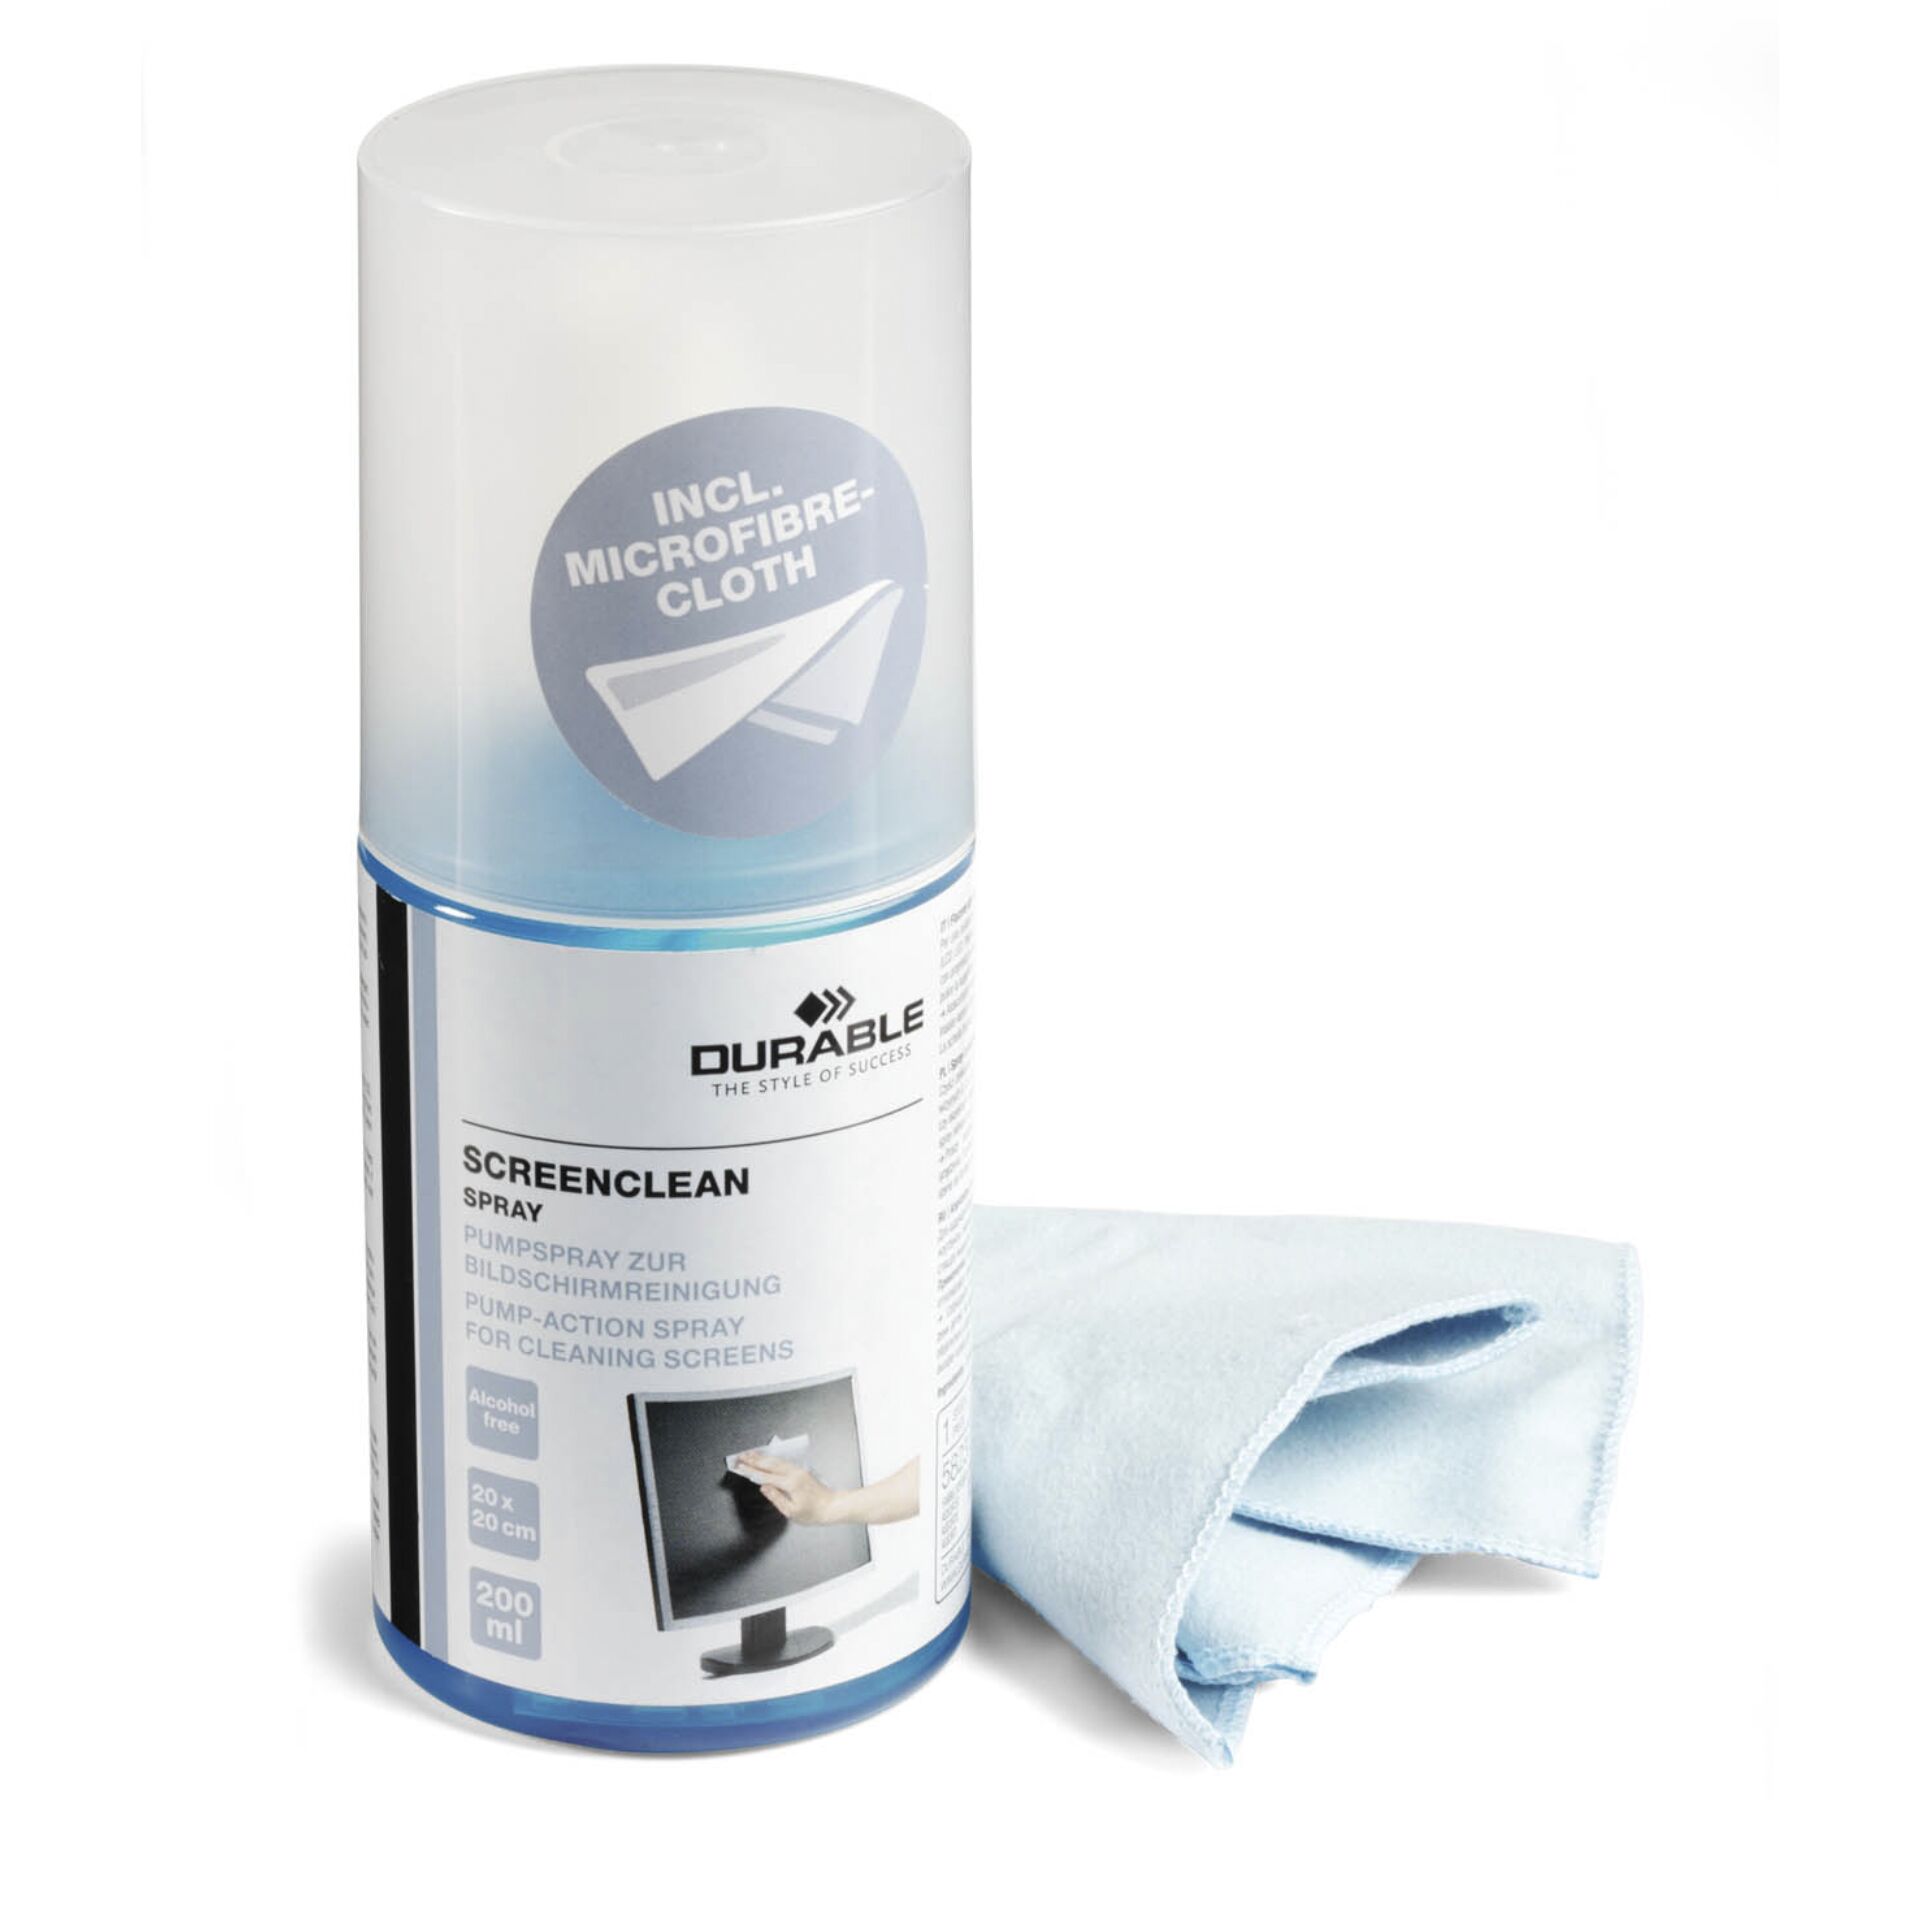 Durable SCREENCLEAN SPRAY 200ml Pump Action Spray + Cloth 58